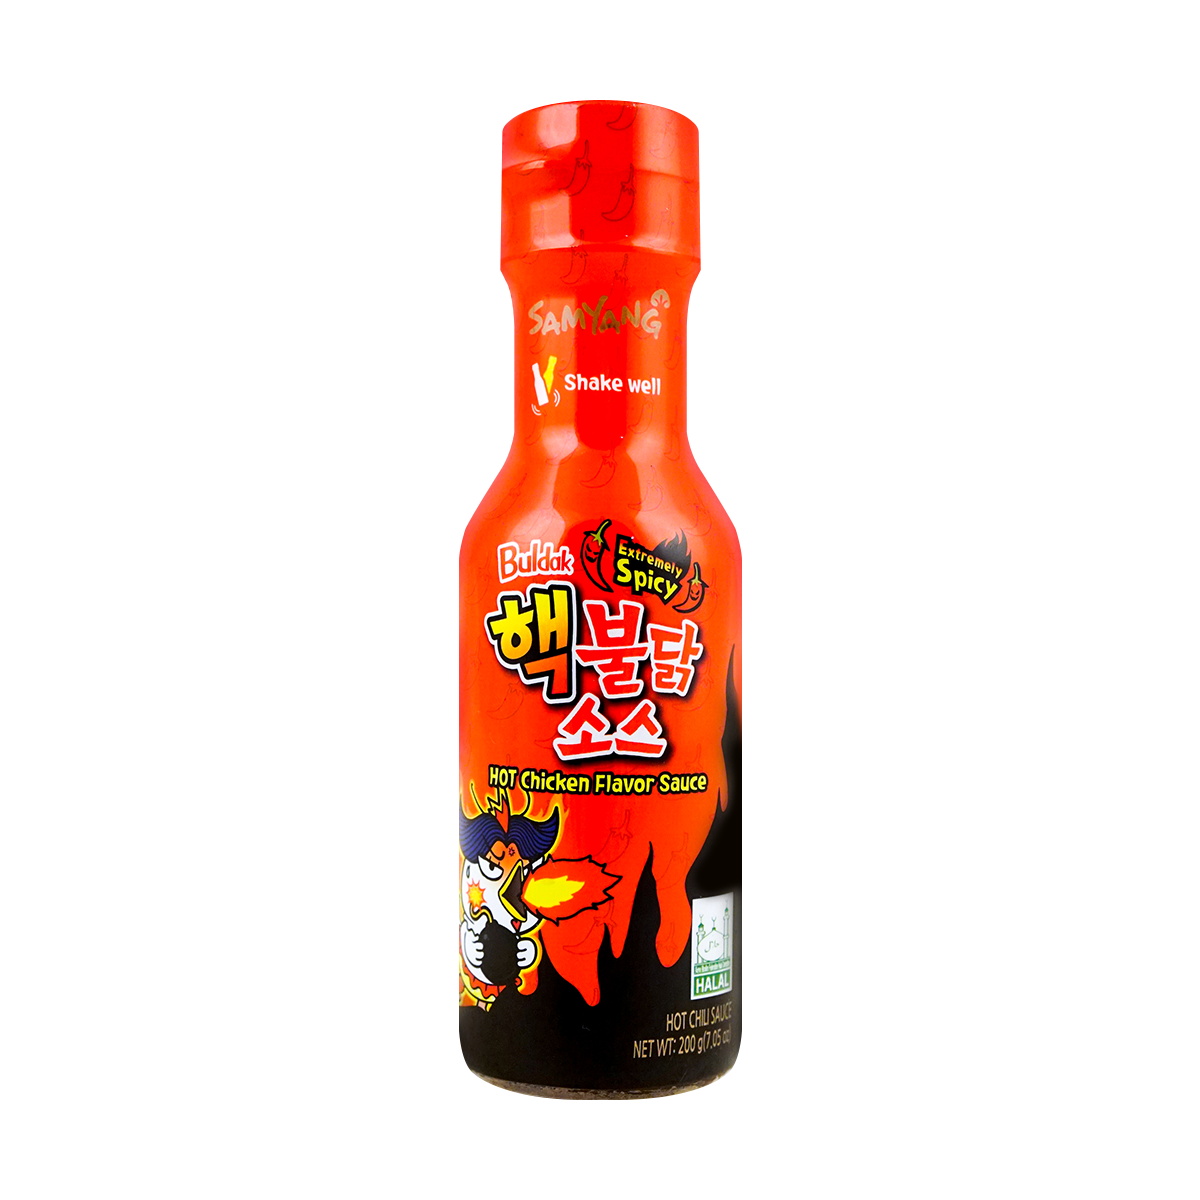 Samyang Buldak 2x Spicy соус. Samyang соус 2 x. Samyang Spicy x2 Sauce. Hot Chicken 2x Spicy соус.